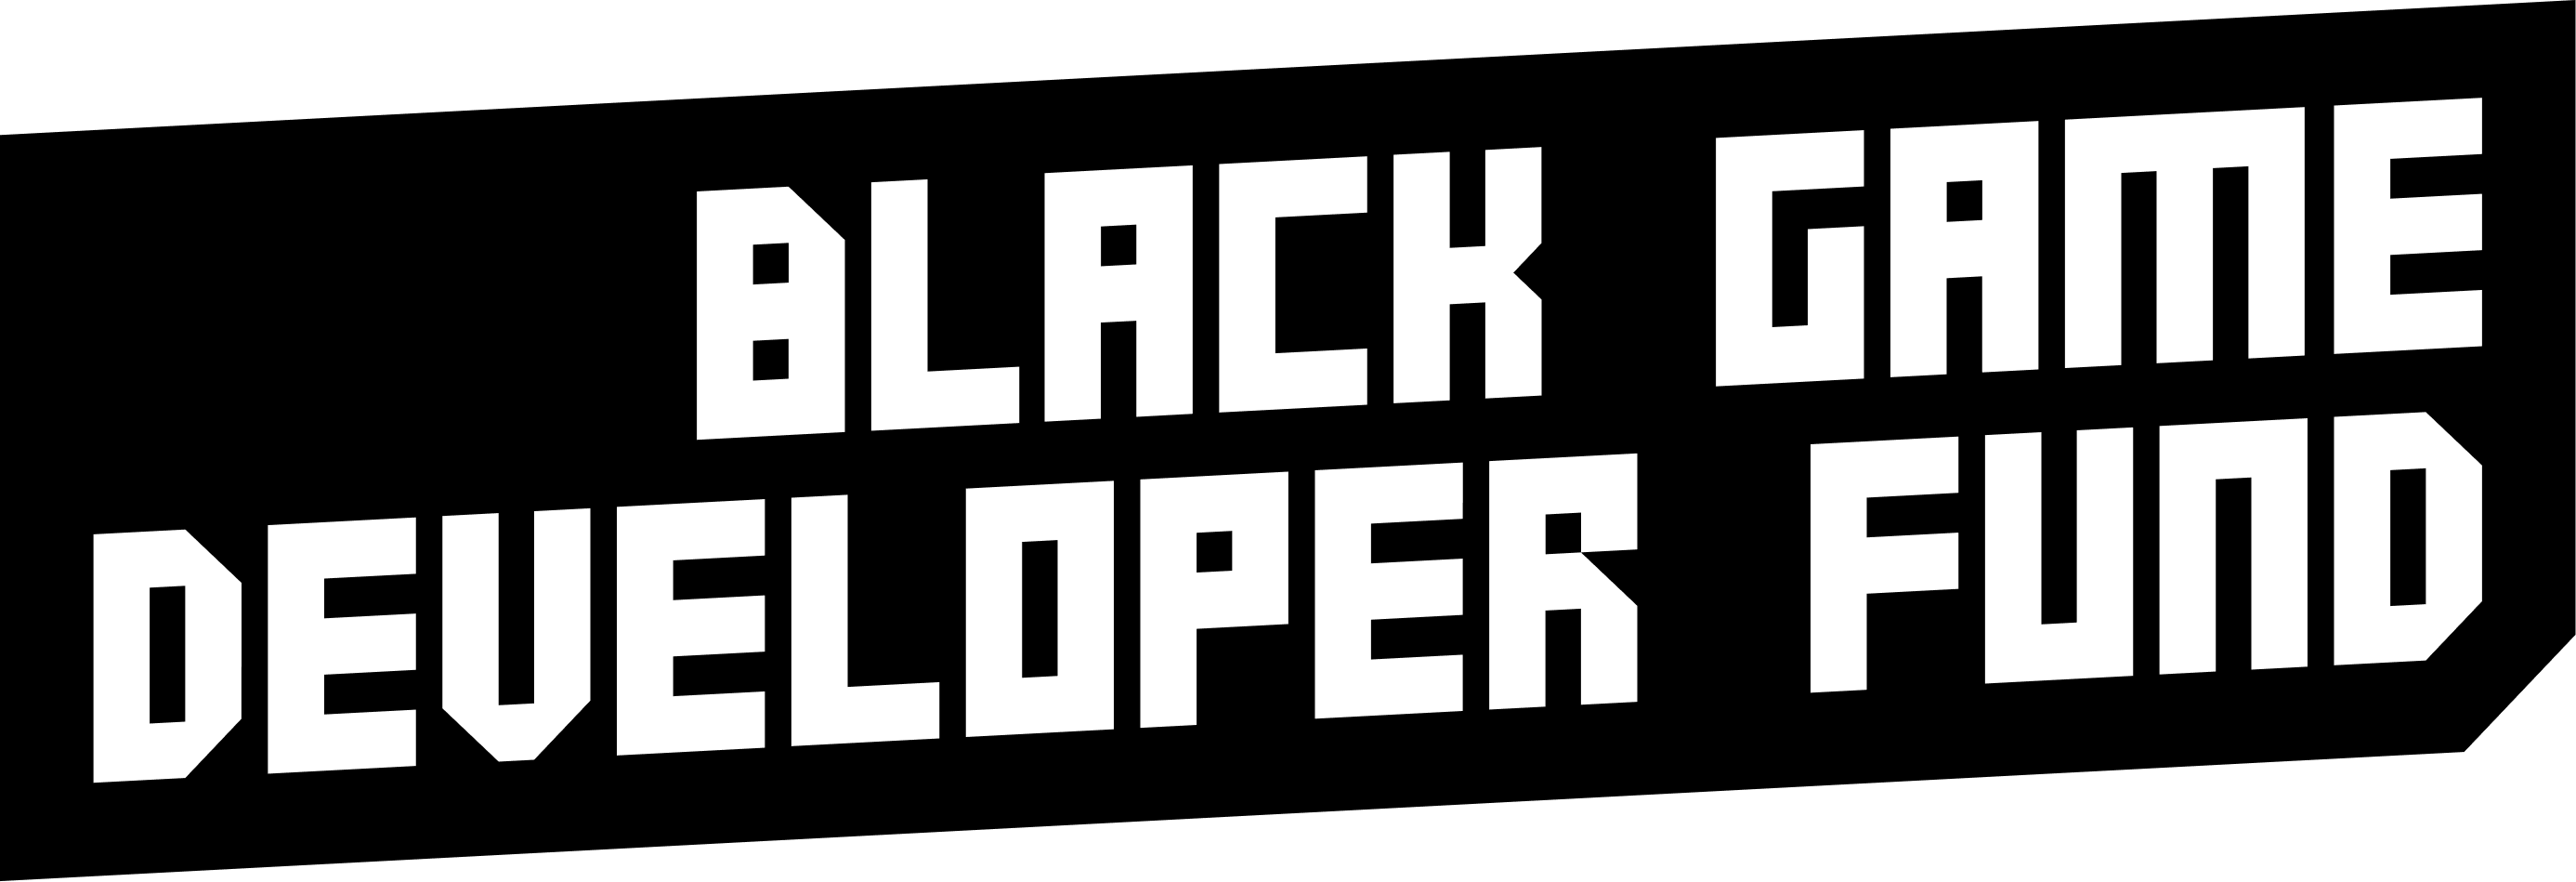 Black Game Developer Fund